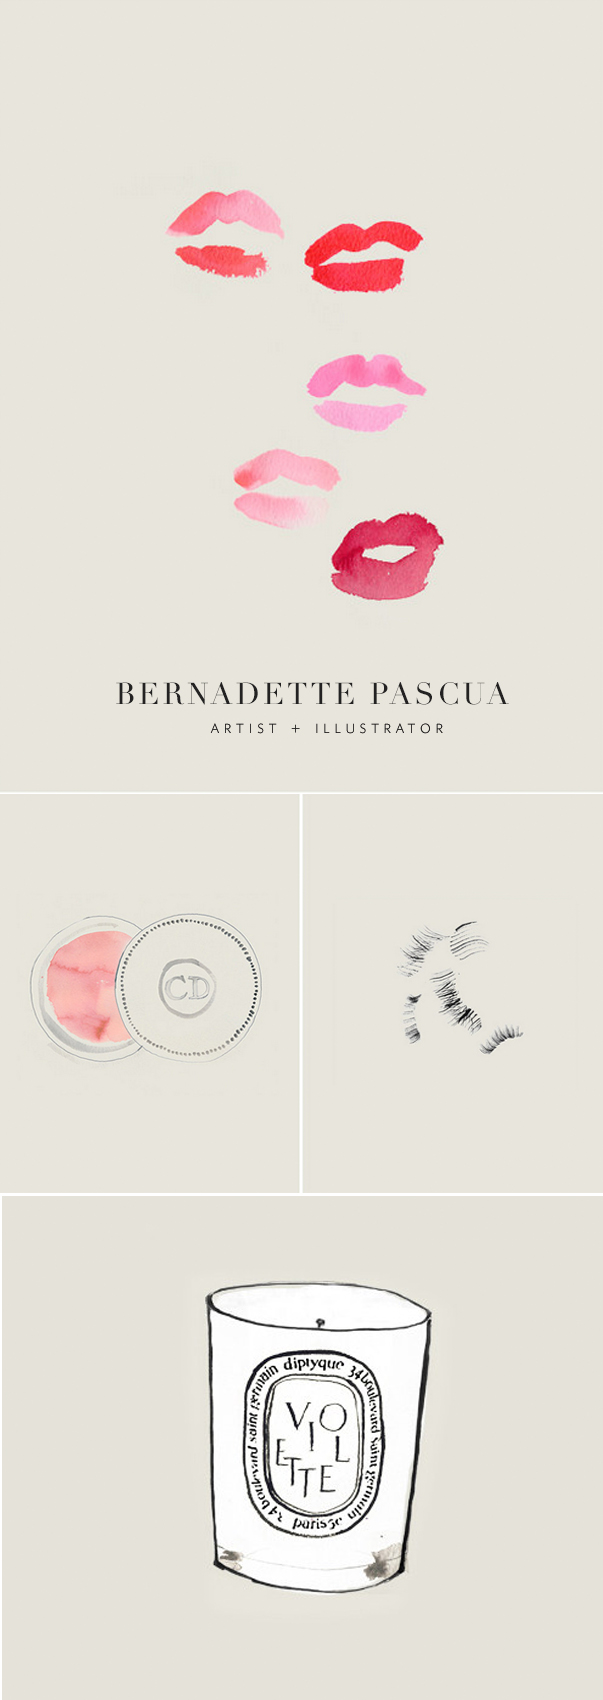 bernadette pascua artist and ilustrator via besotted blog